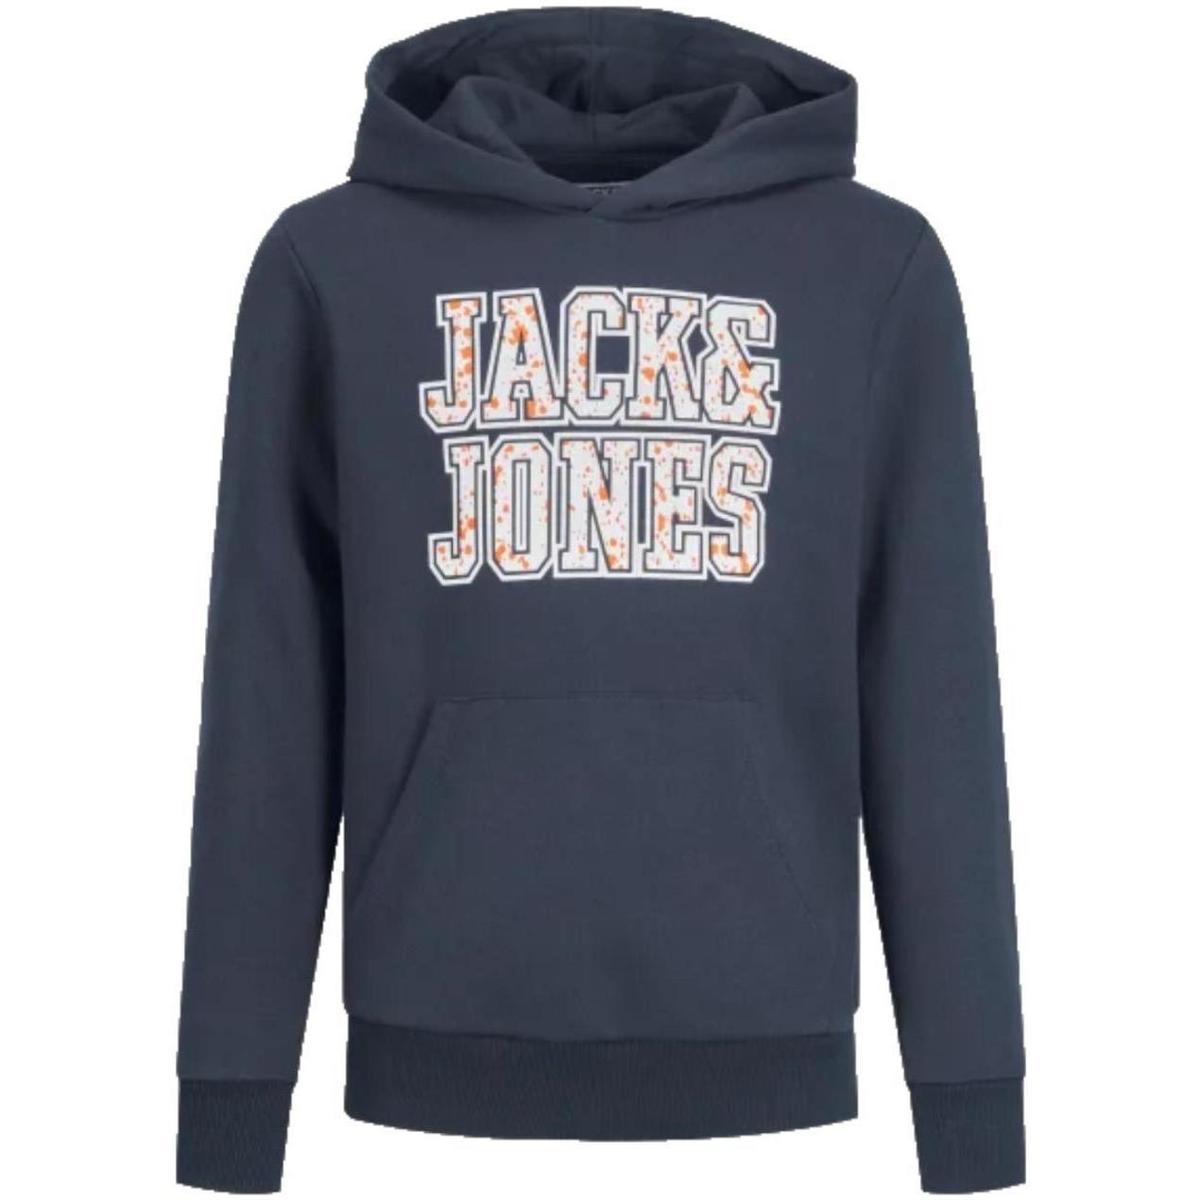 Oblačila Dečki Puloverji Jack & Jones  Modra